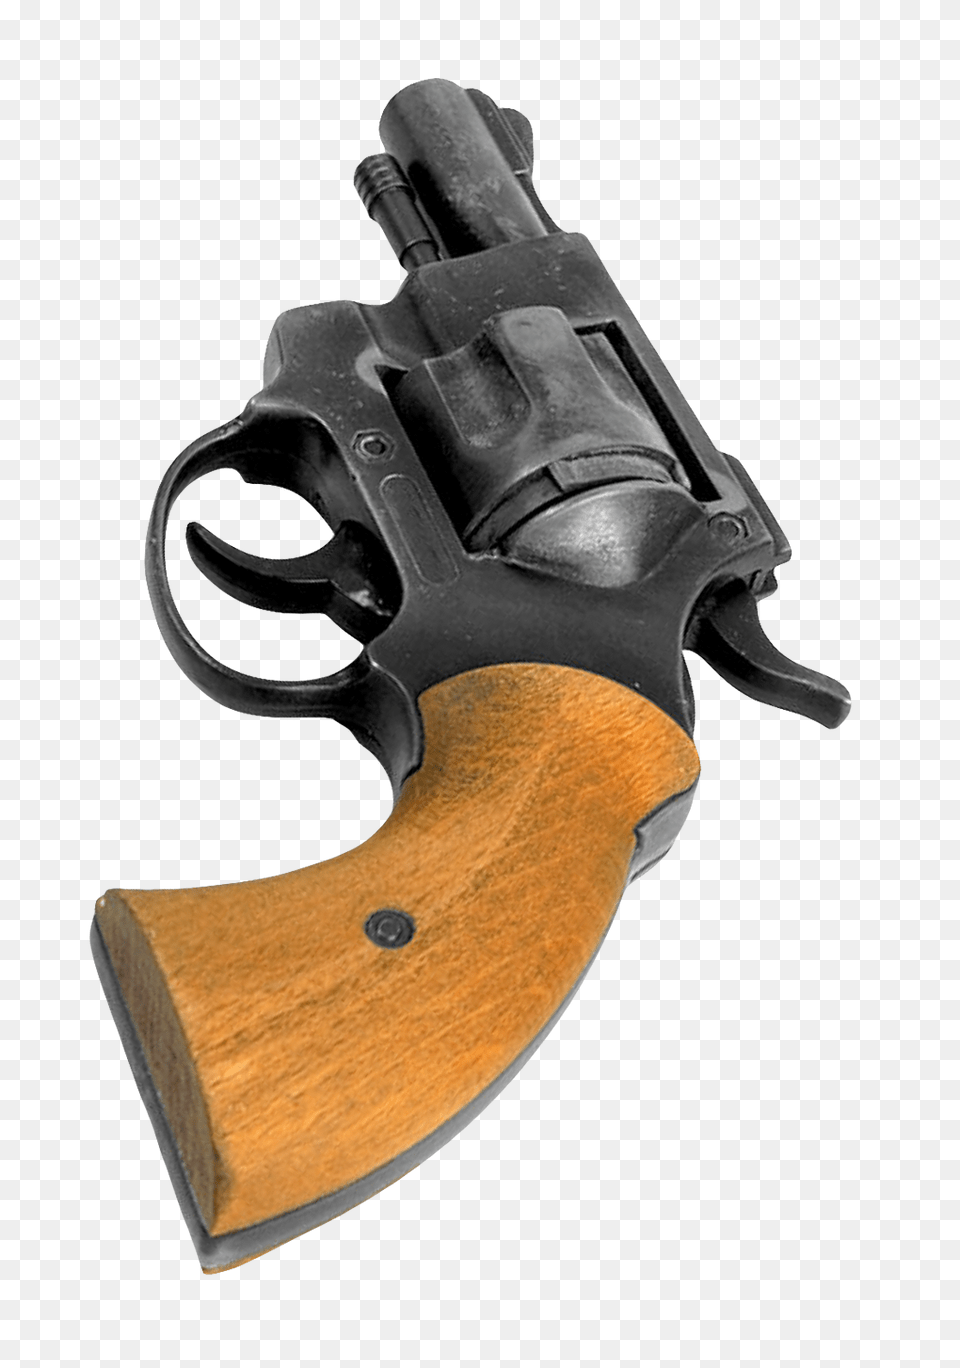 Pngpix Com Revolver Image, Firearm, Gun, Handgun, Weapon Free Transparent Png